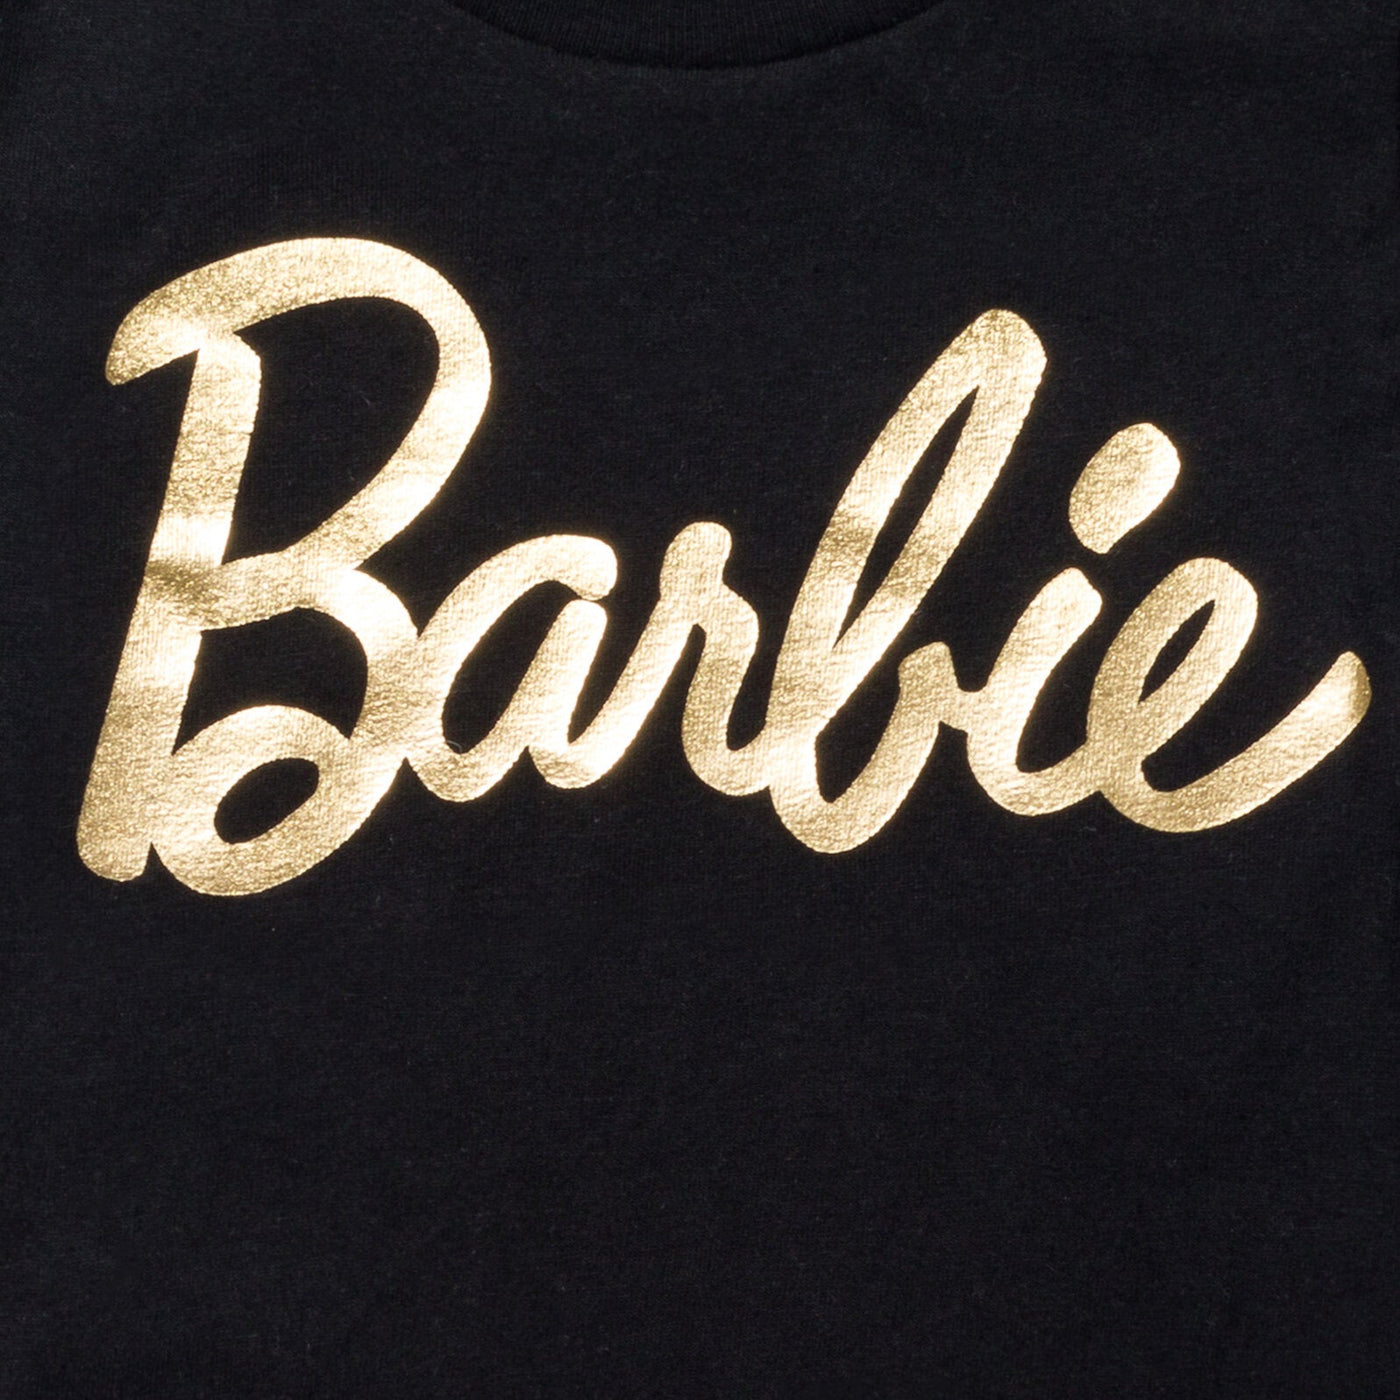 Barbie Pullover T-Shirt - imagikids